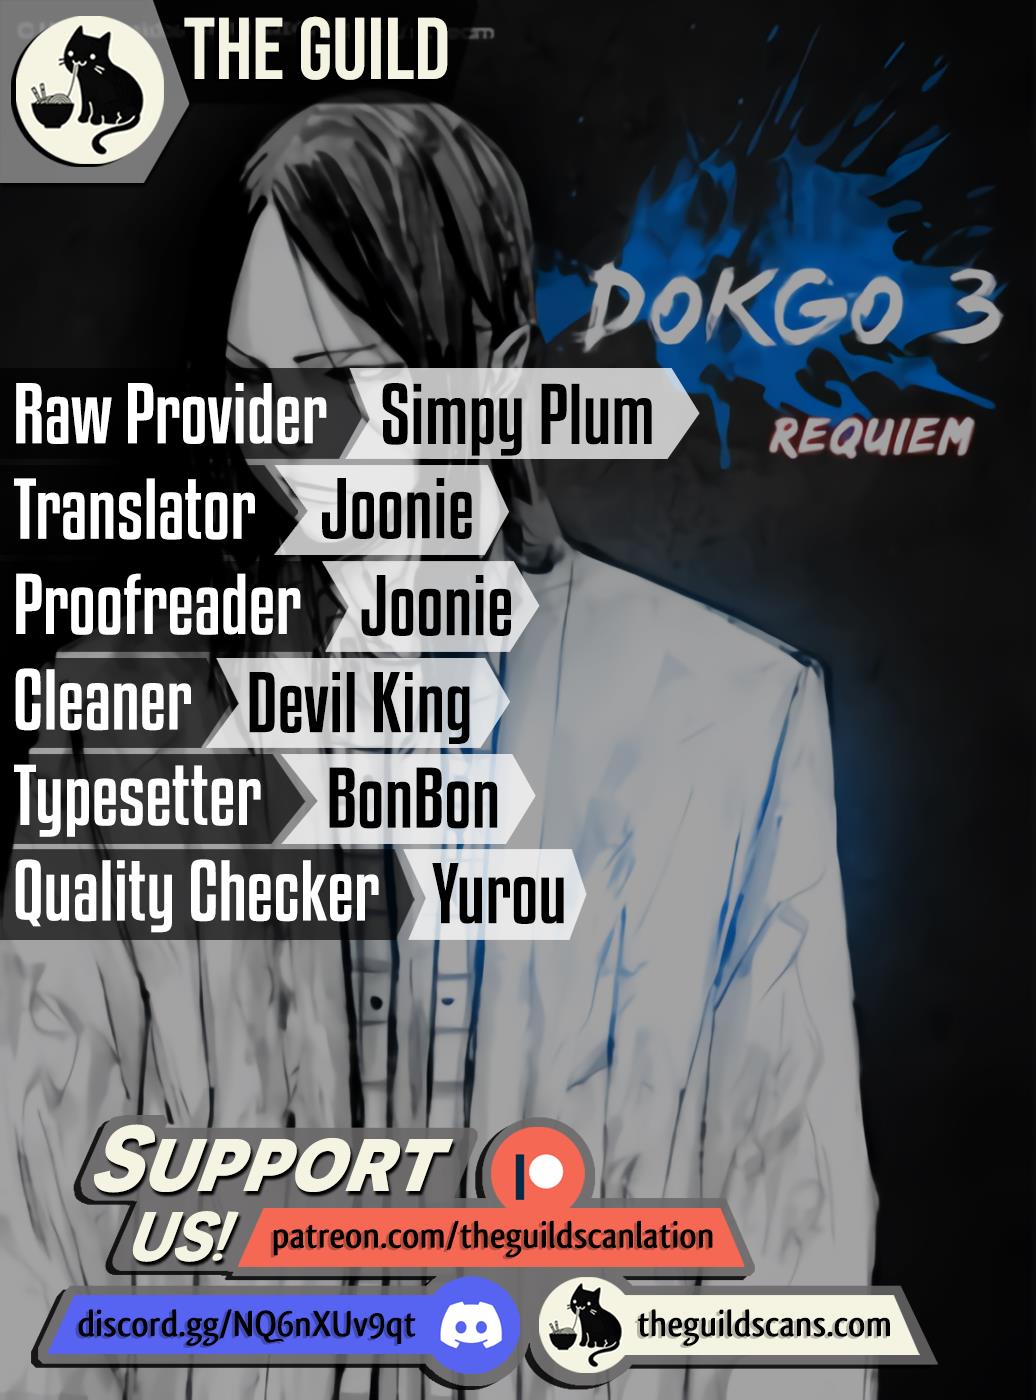 Dokgo 3: Requiem - Page 1